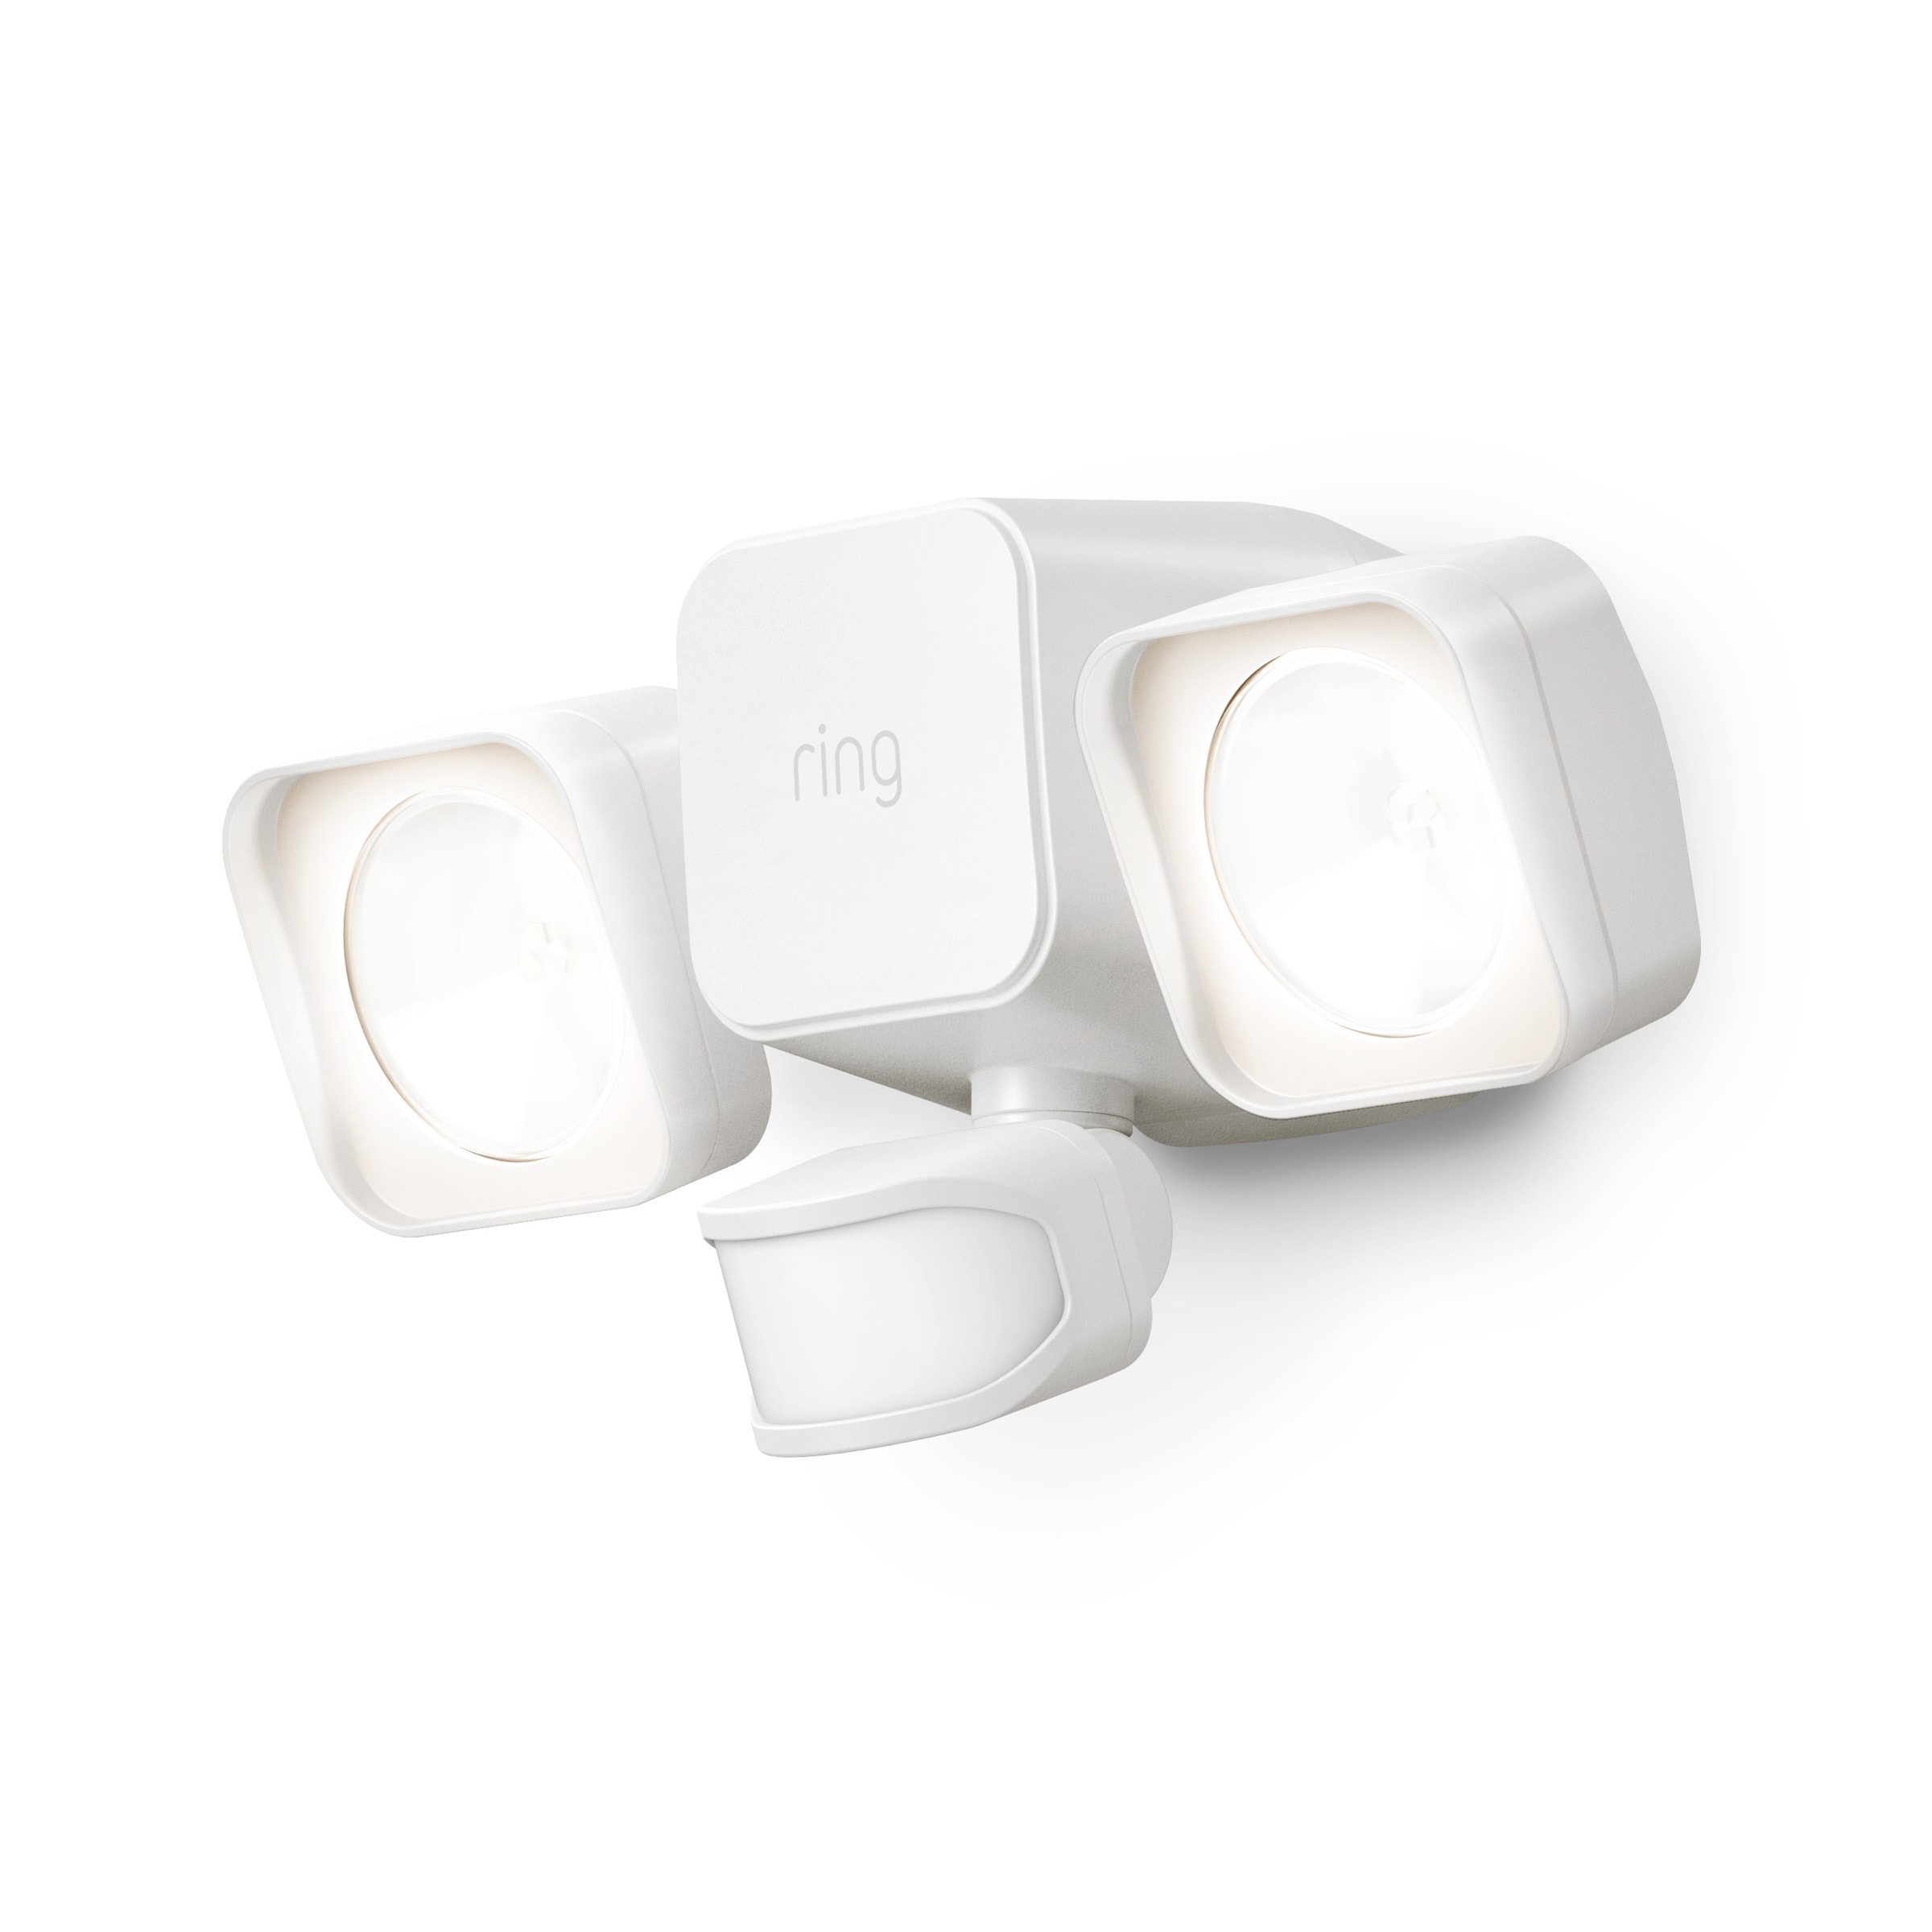 Brand New ring Smart Lighting Ring Bridge White Works with Alexa